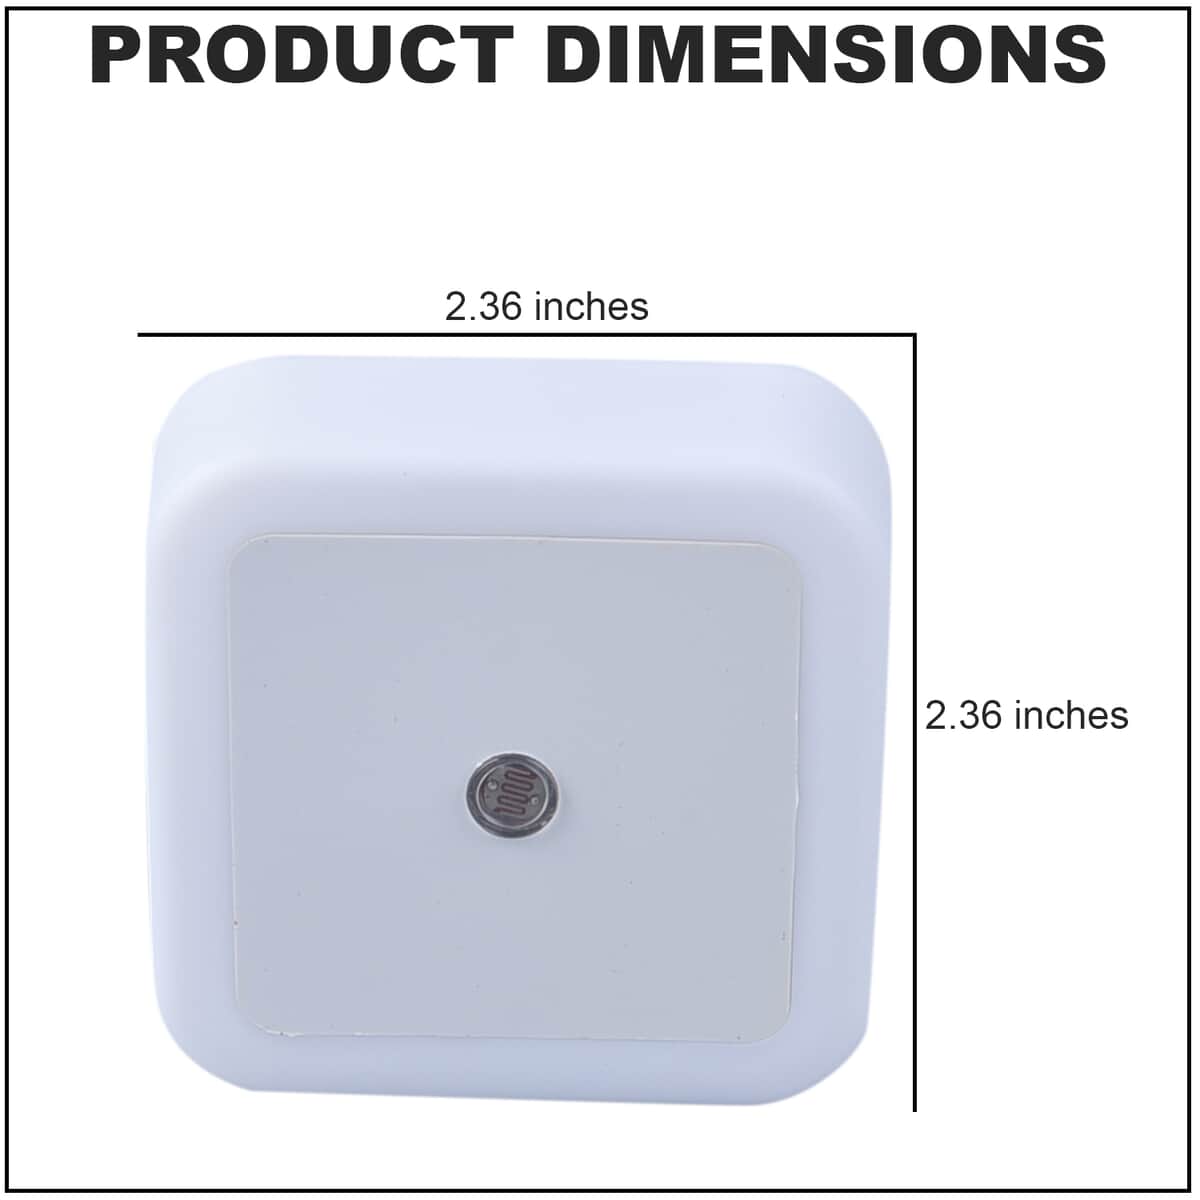 Set of 6 White Square Plug-in Night LED Light with Sensitive Light Sensor (2.36"x2.36") image number 3